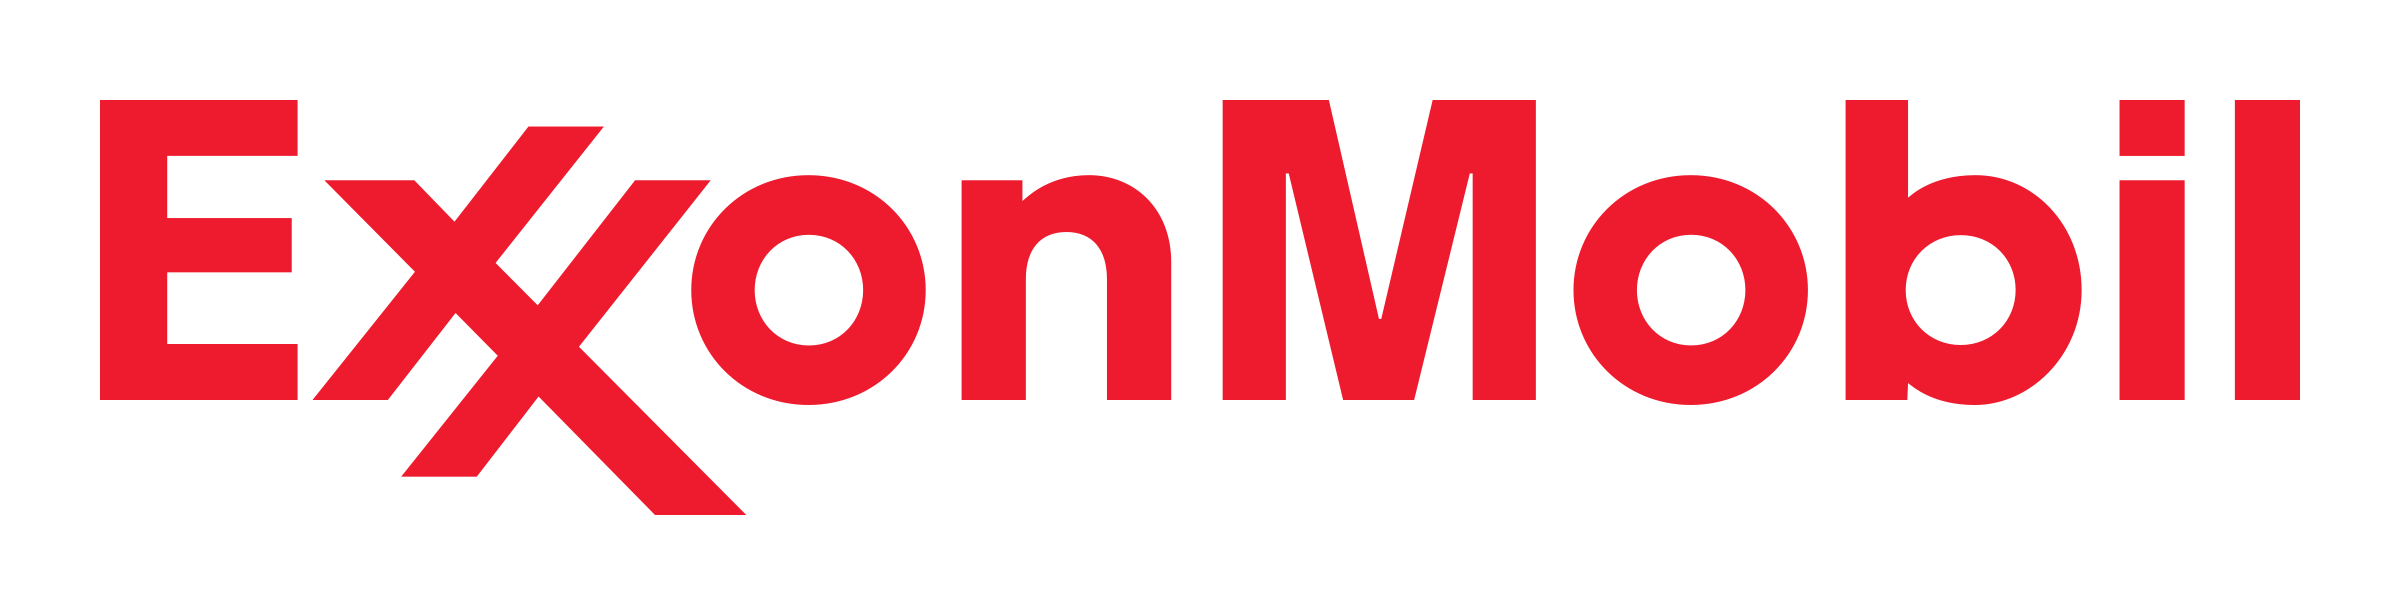 exxonmobil-logo-png-transparent.png